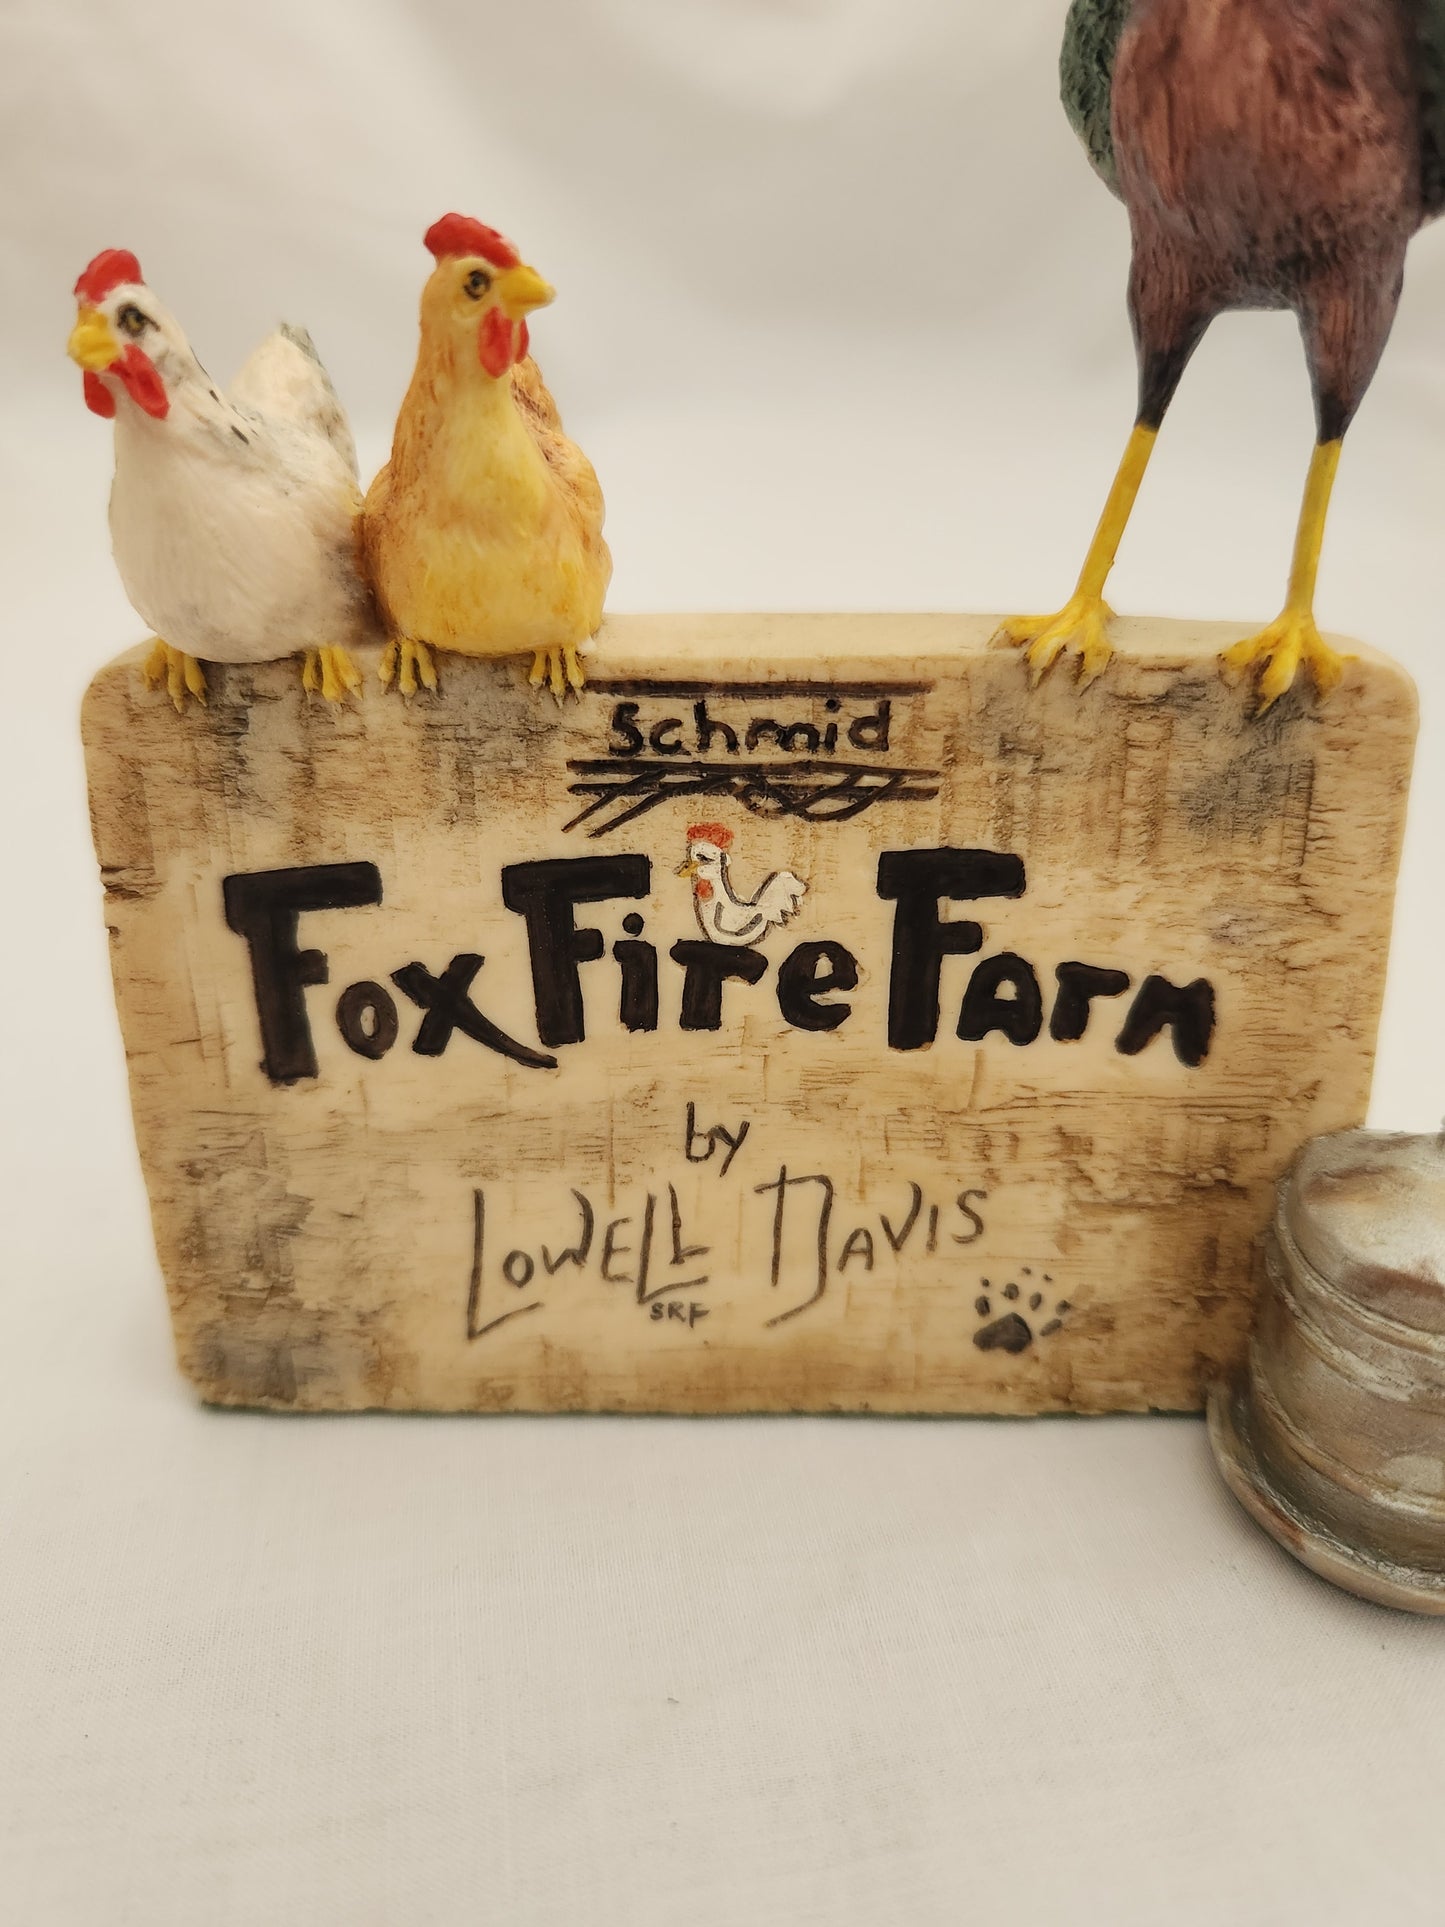 "Counter Sign" FoxFire Farm Figurine by Lowell Davis - #888907